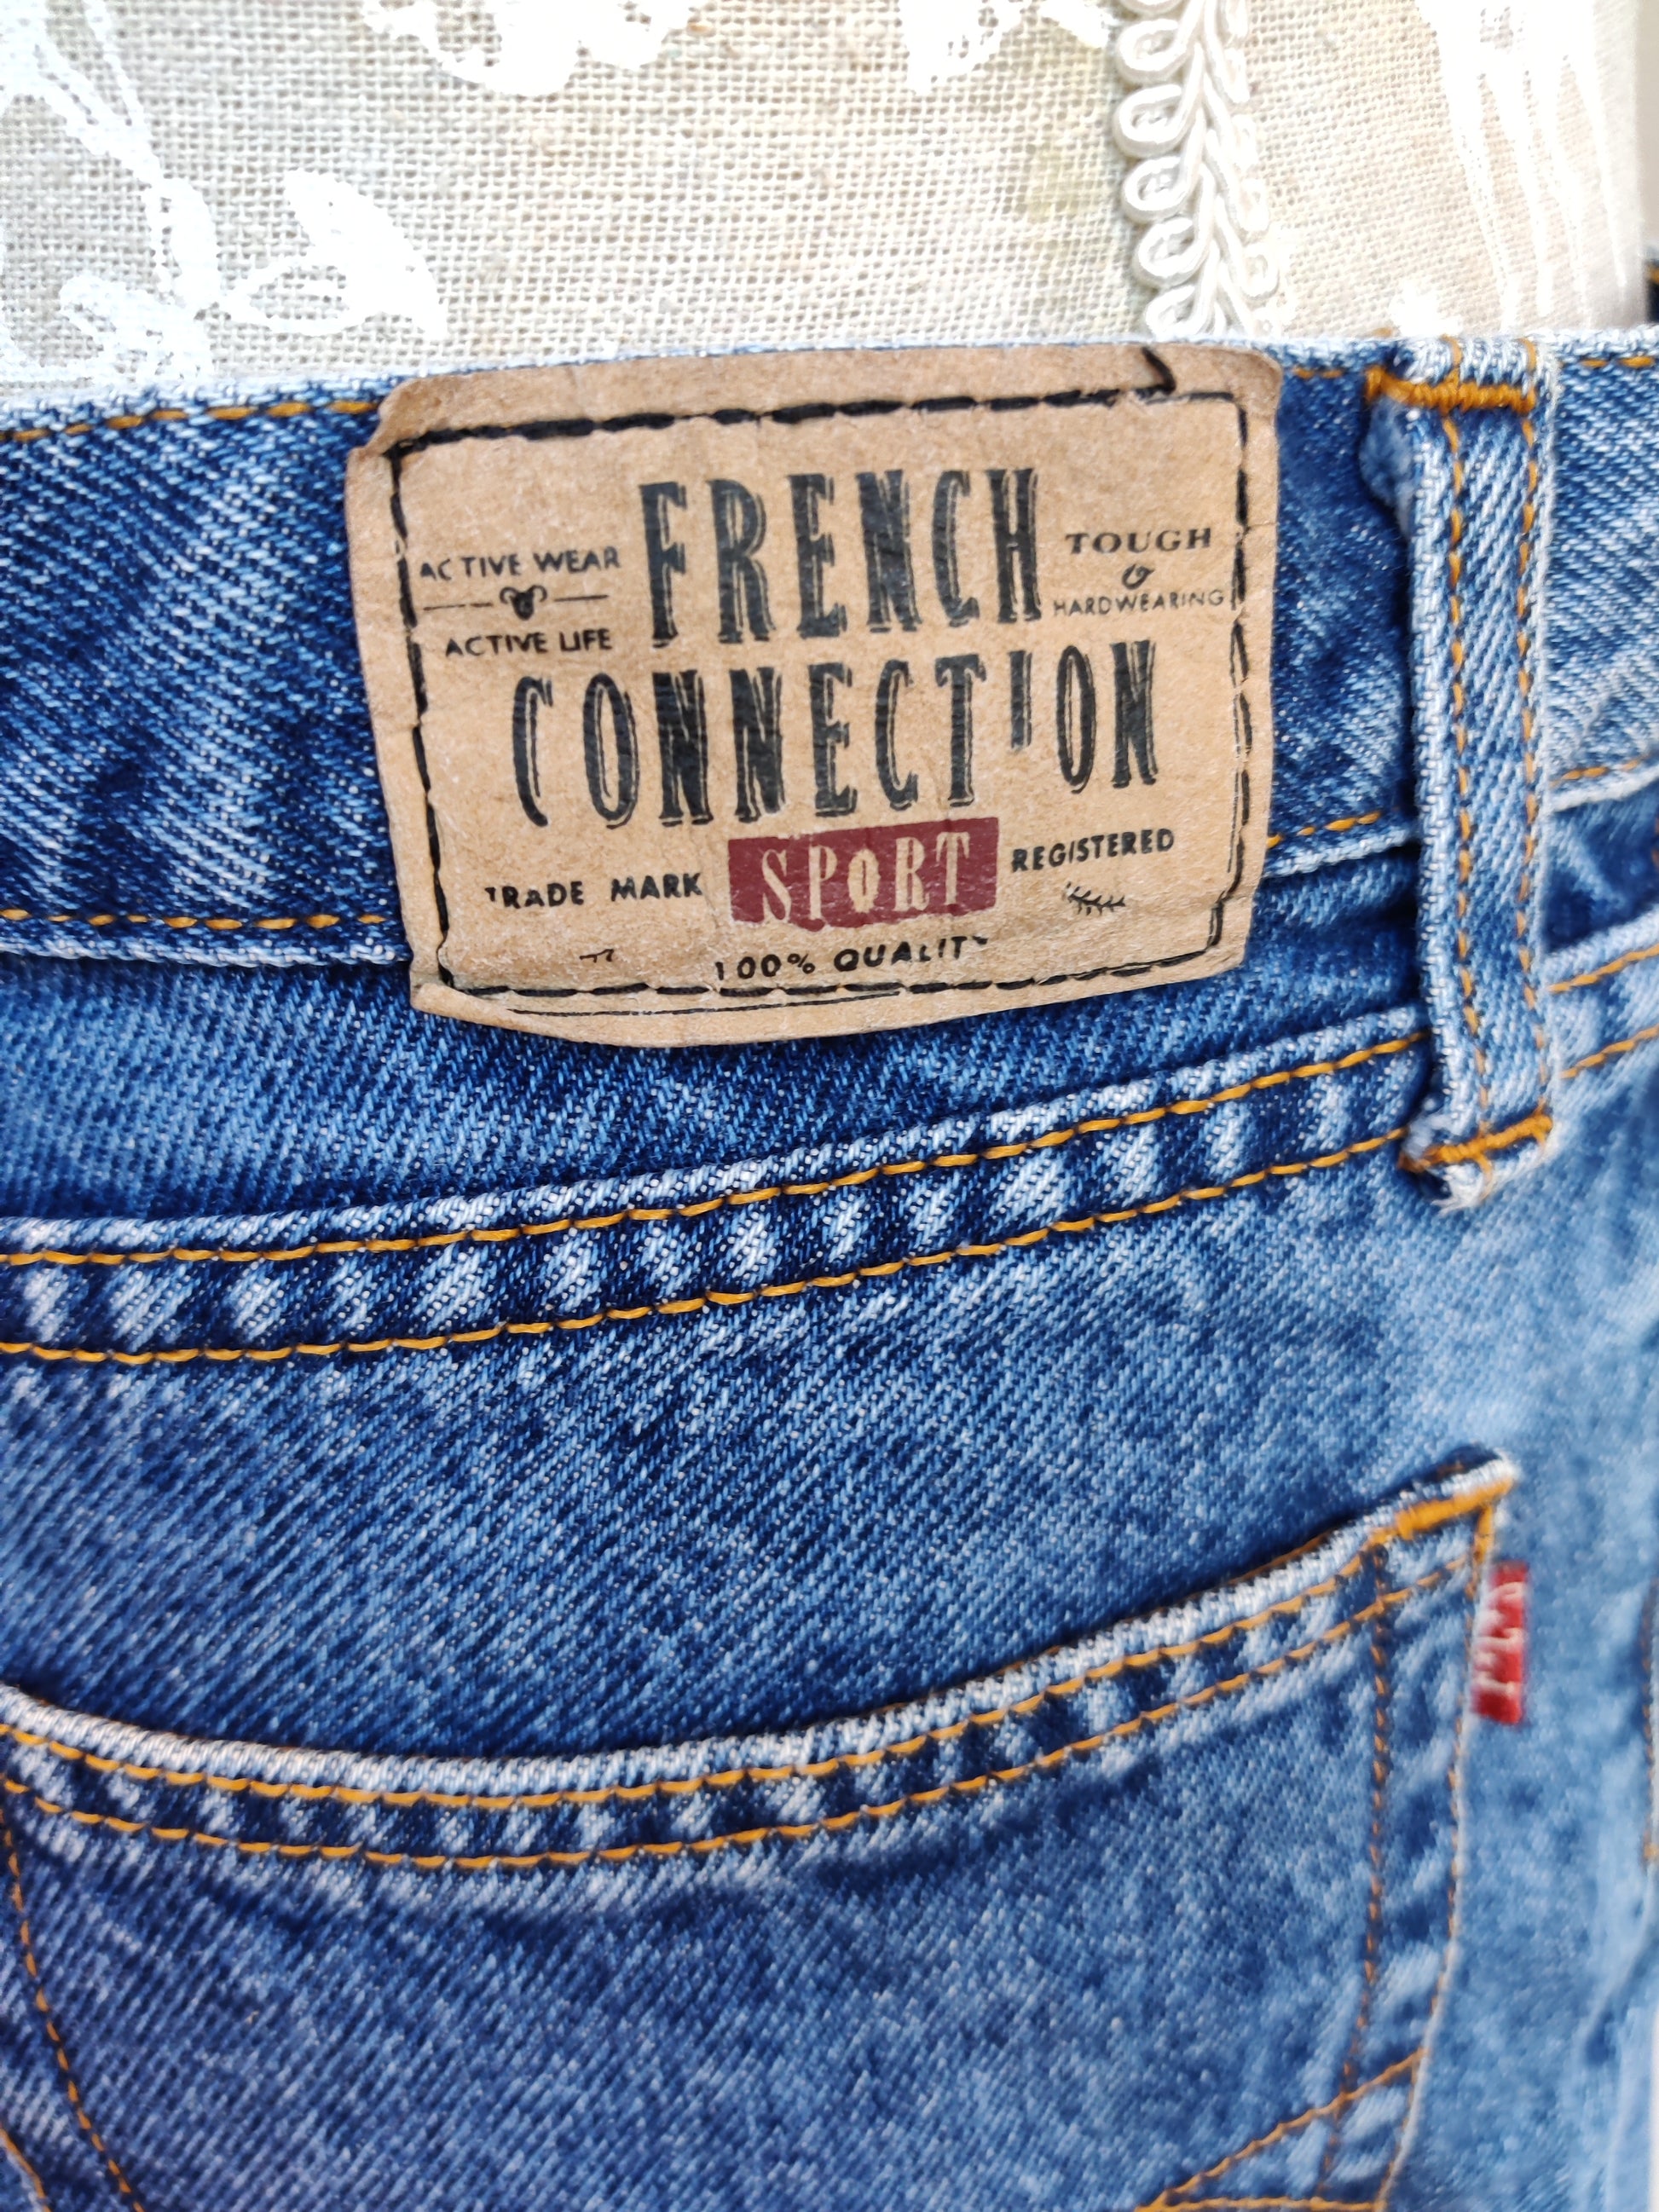 Vintage french connection denim skirt